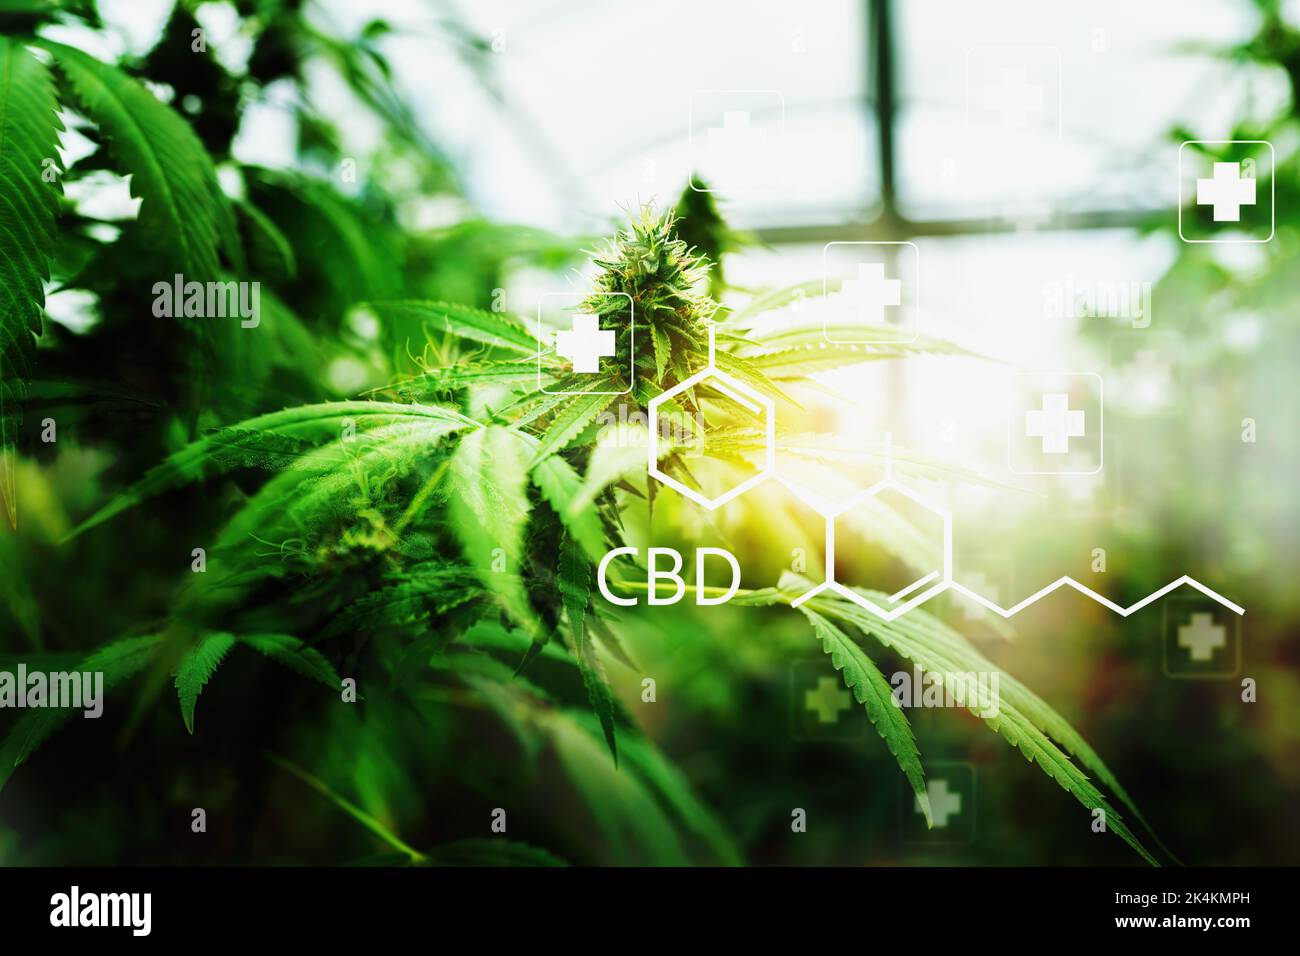 Cannabis or Marijuana or hemp leaf in a greenhouse. weed, herbal alternative medicine, cbd oil, pharmaceutical industry Concept Stock Photo